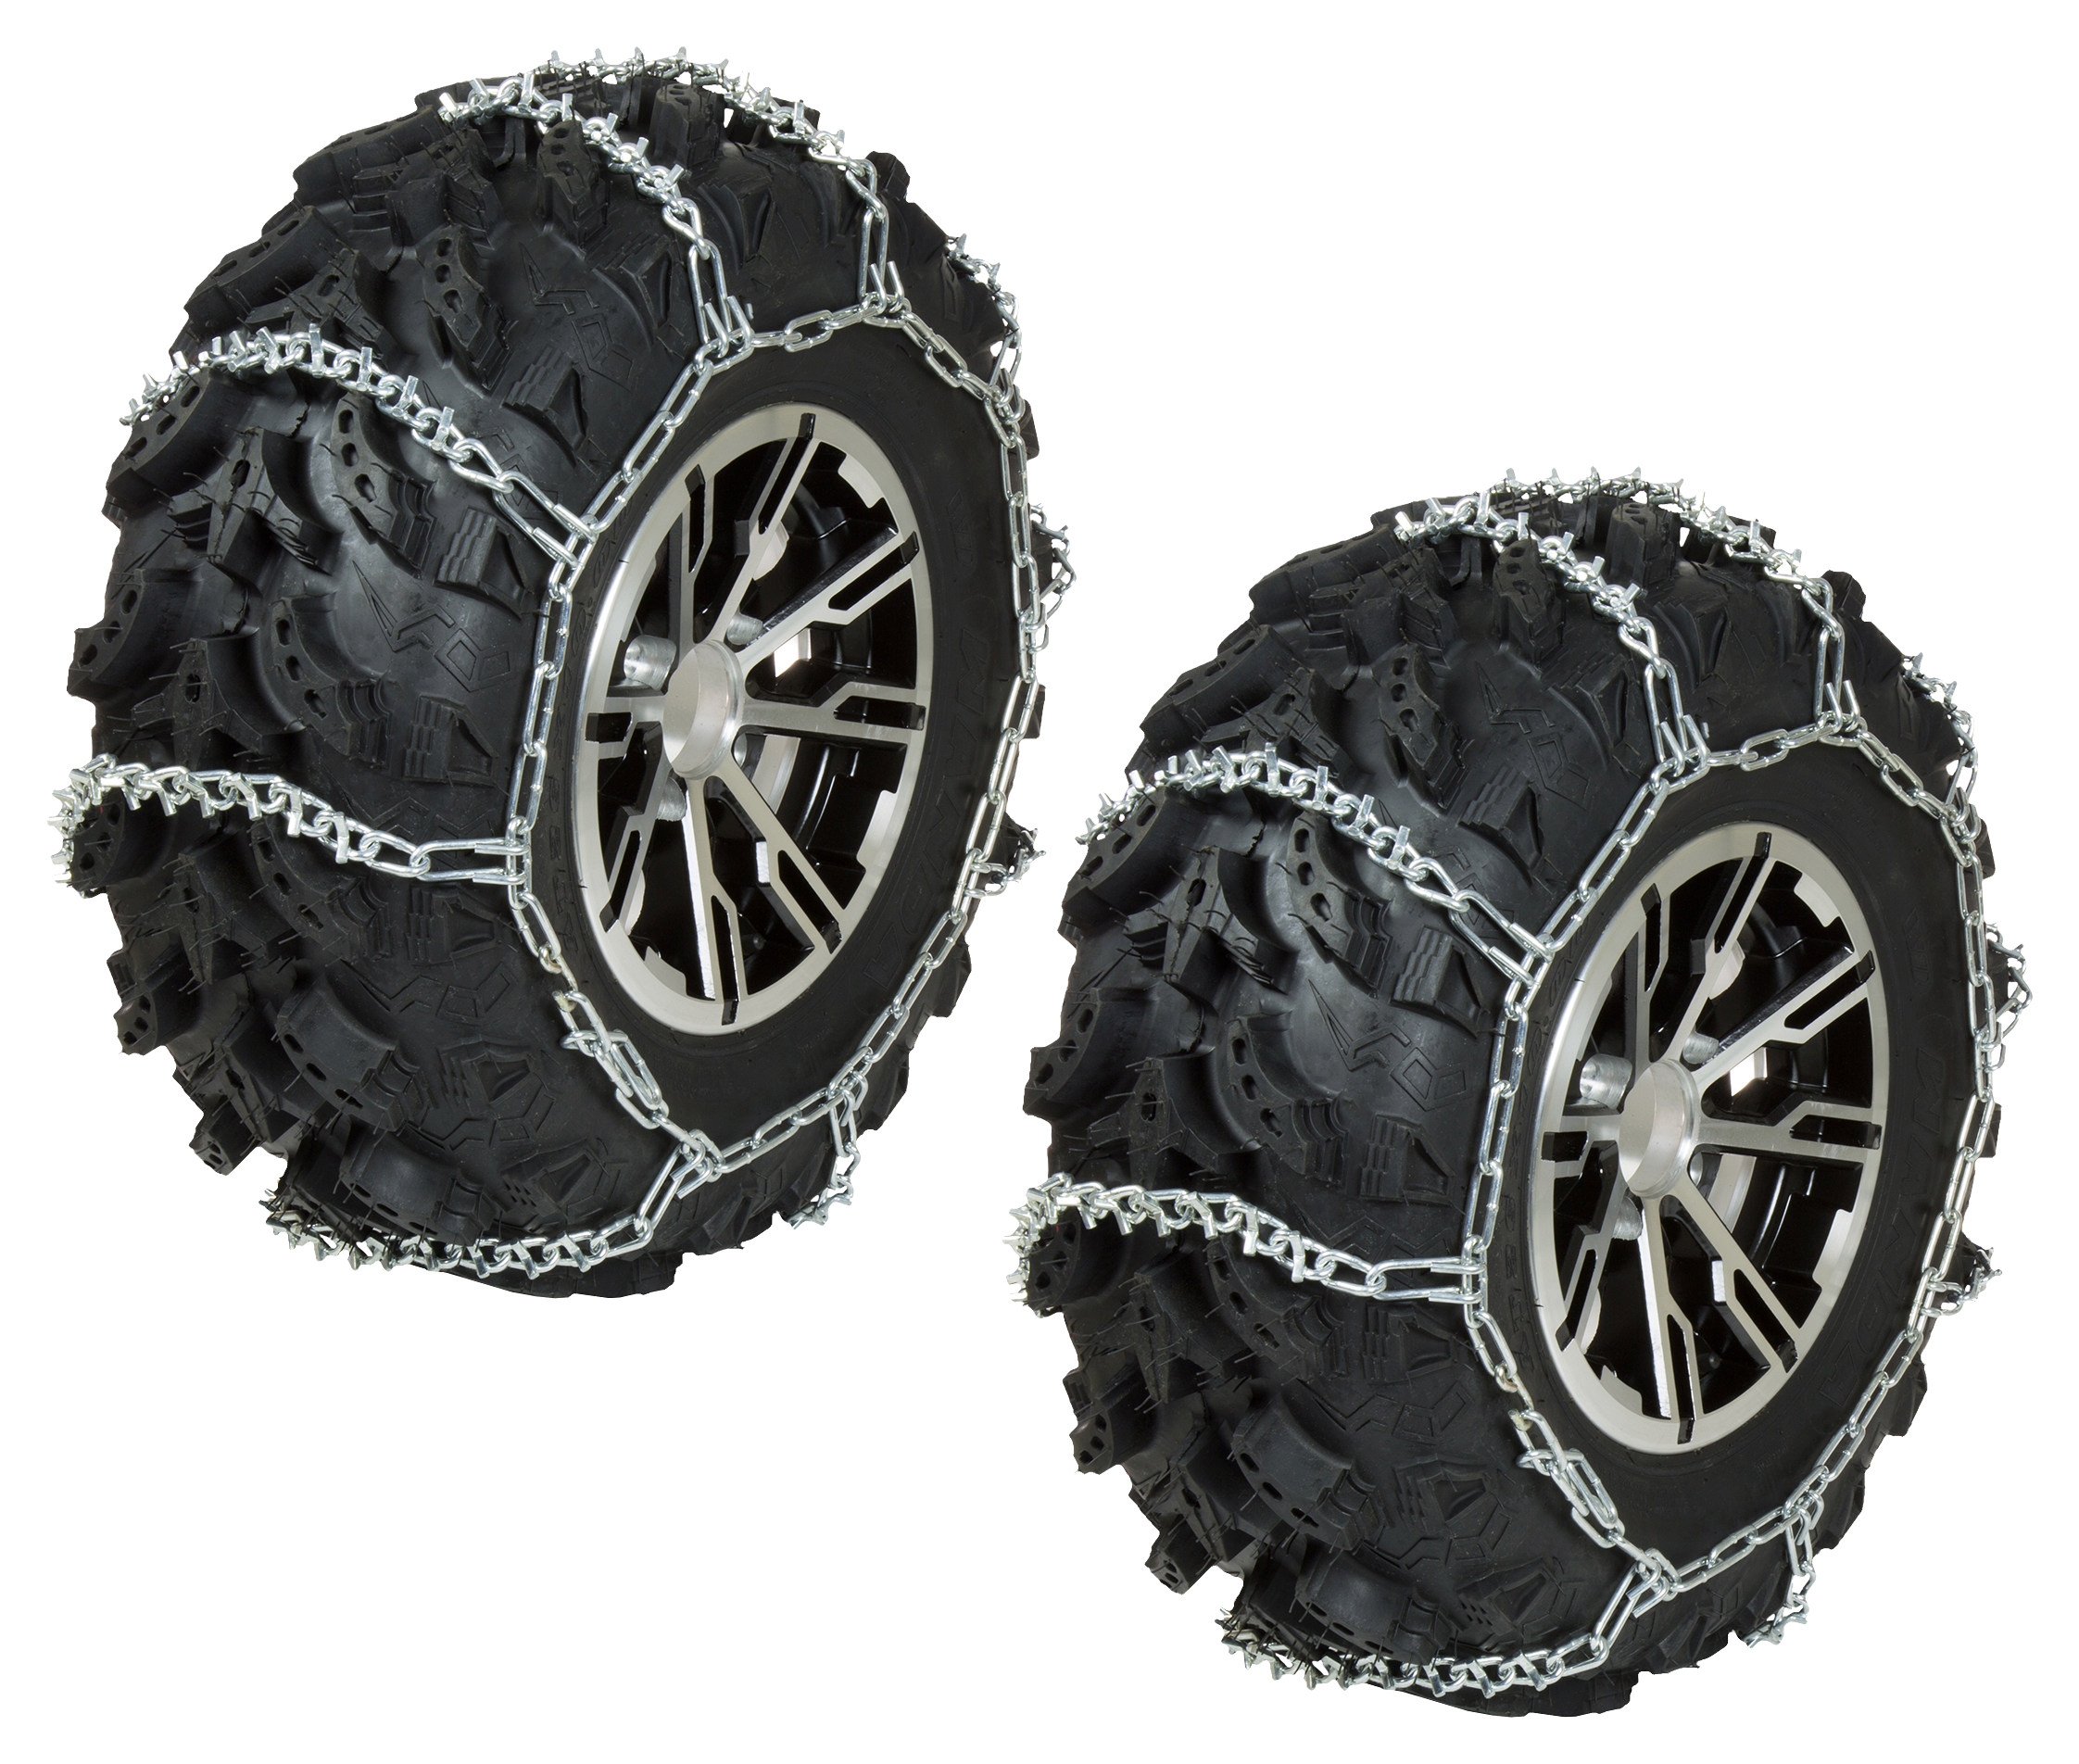 Raider ATV Tire Chains - 56""L X 16""W